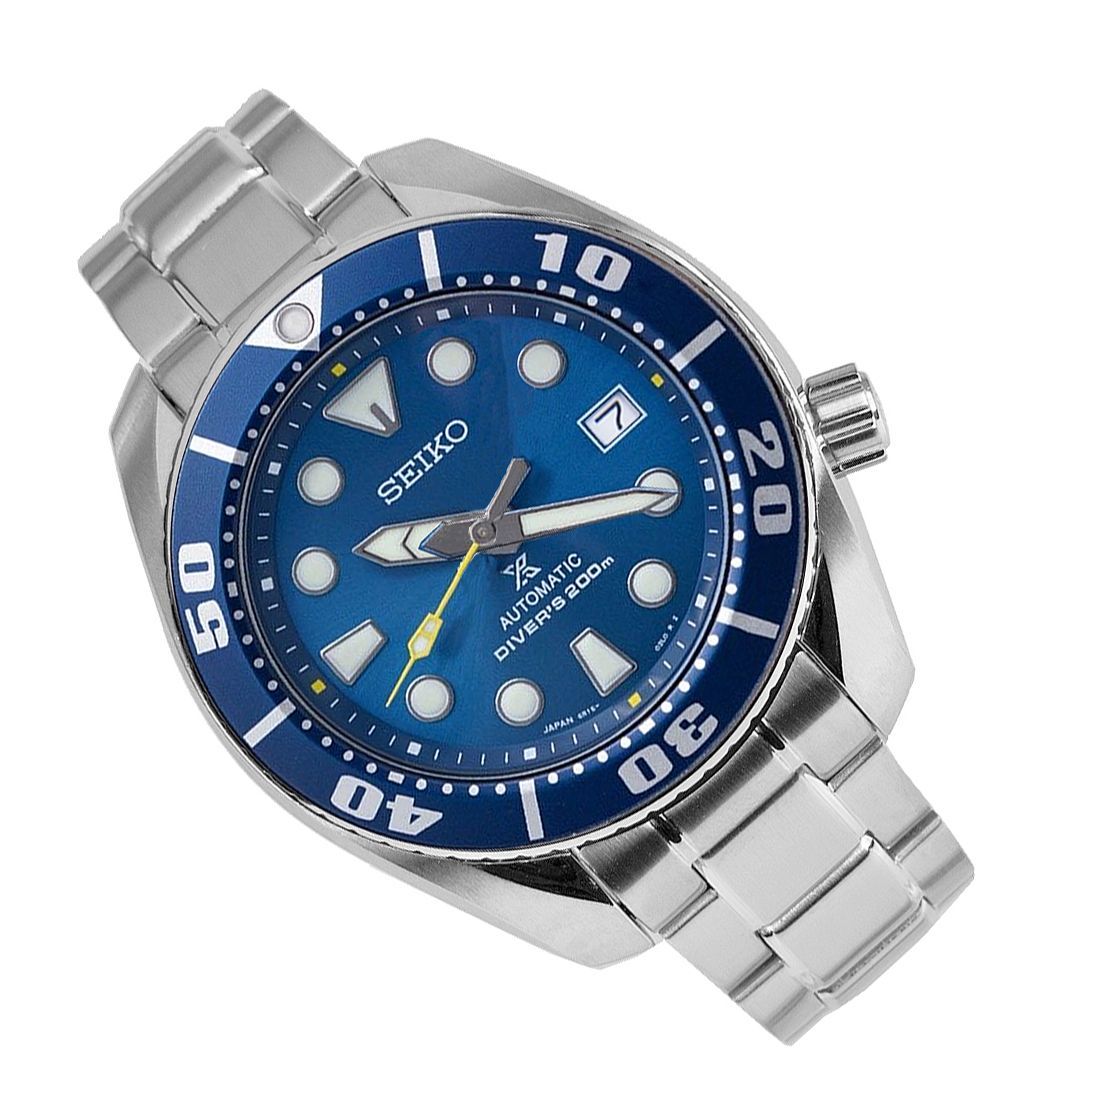 Seiko SBDC069 Prospex Automatic Blue Coral Divers JDM Watch -Seiko